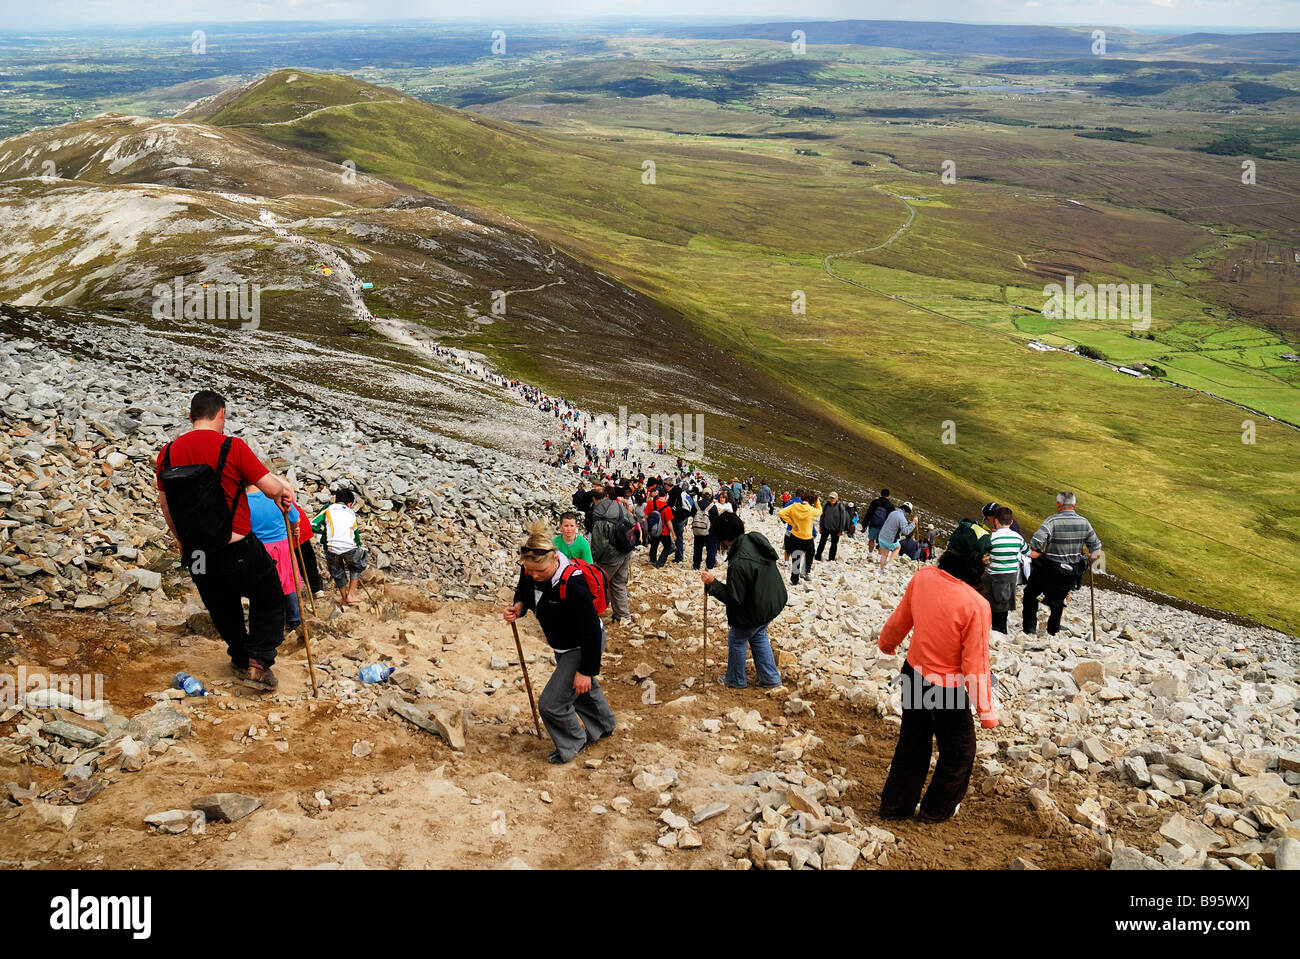 Ireland, County Mayo, Croagh Patrick Mountain. Pilgrims making their way to the mountain top as part of Reek Sunday pilgrimage. Stock Photo